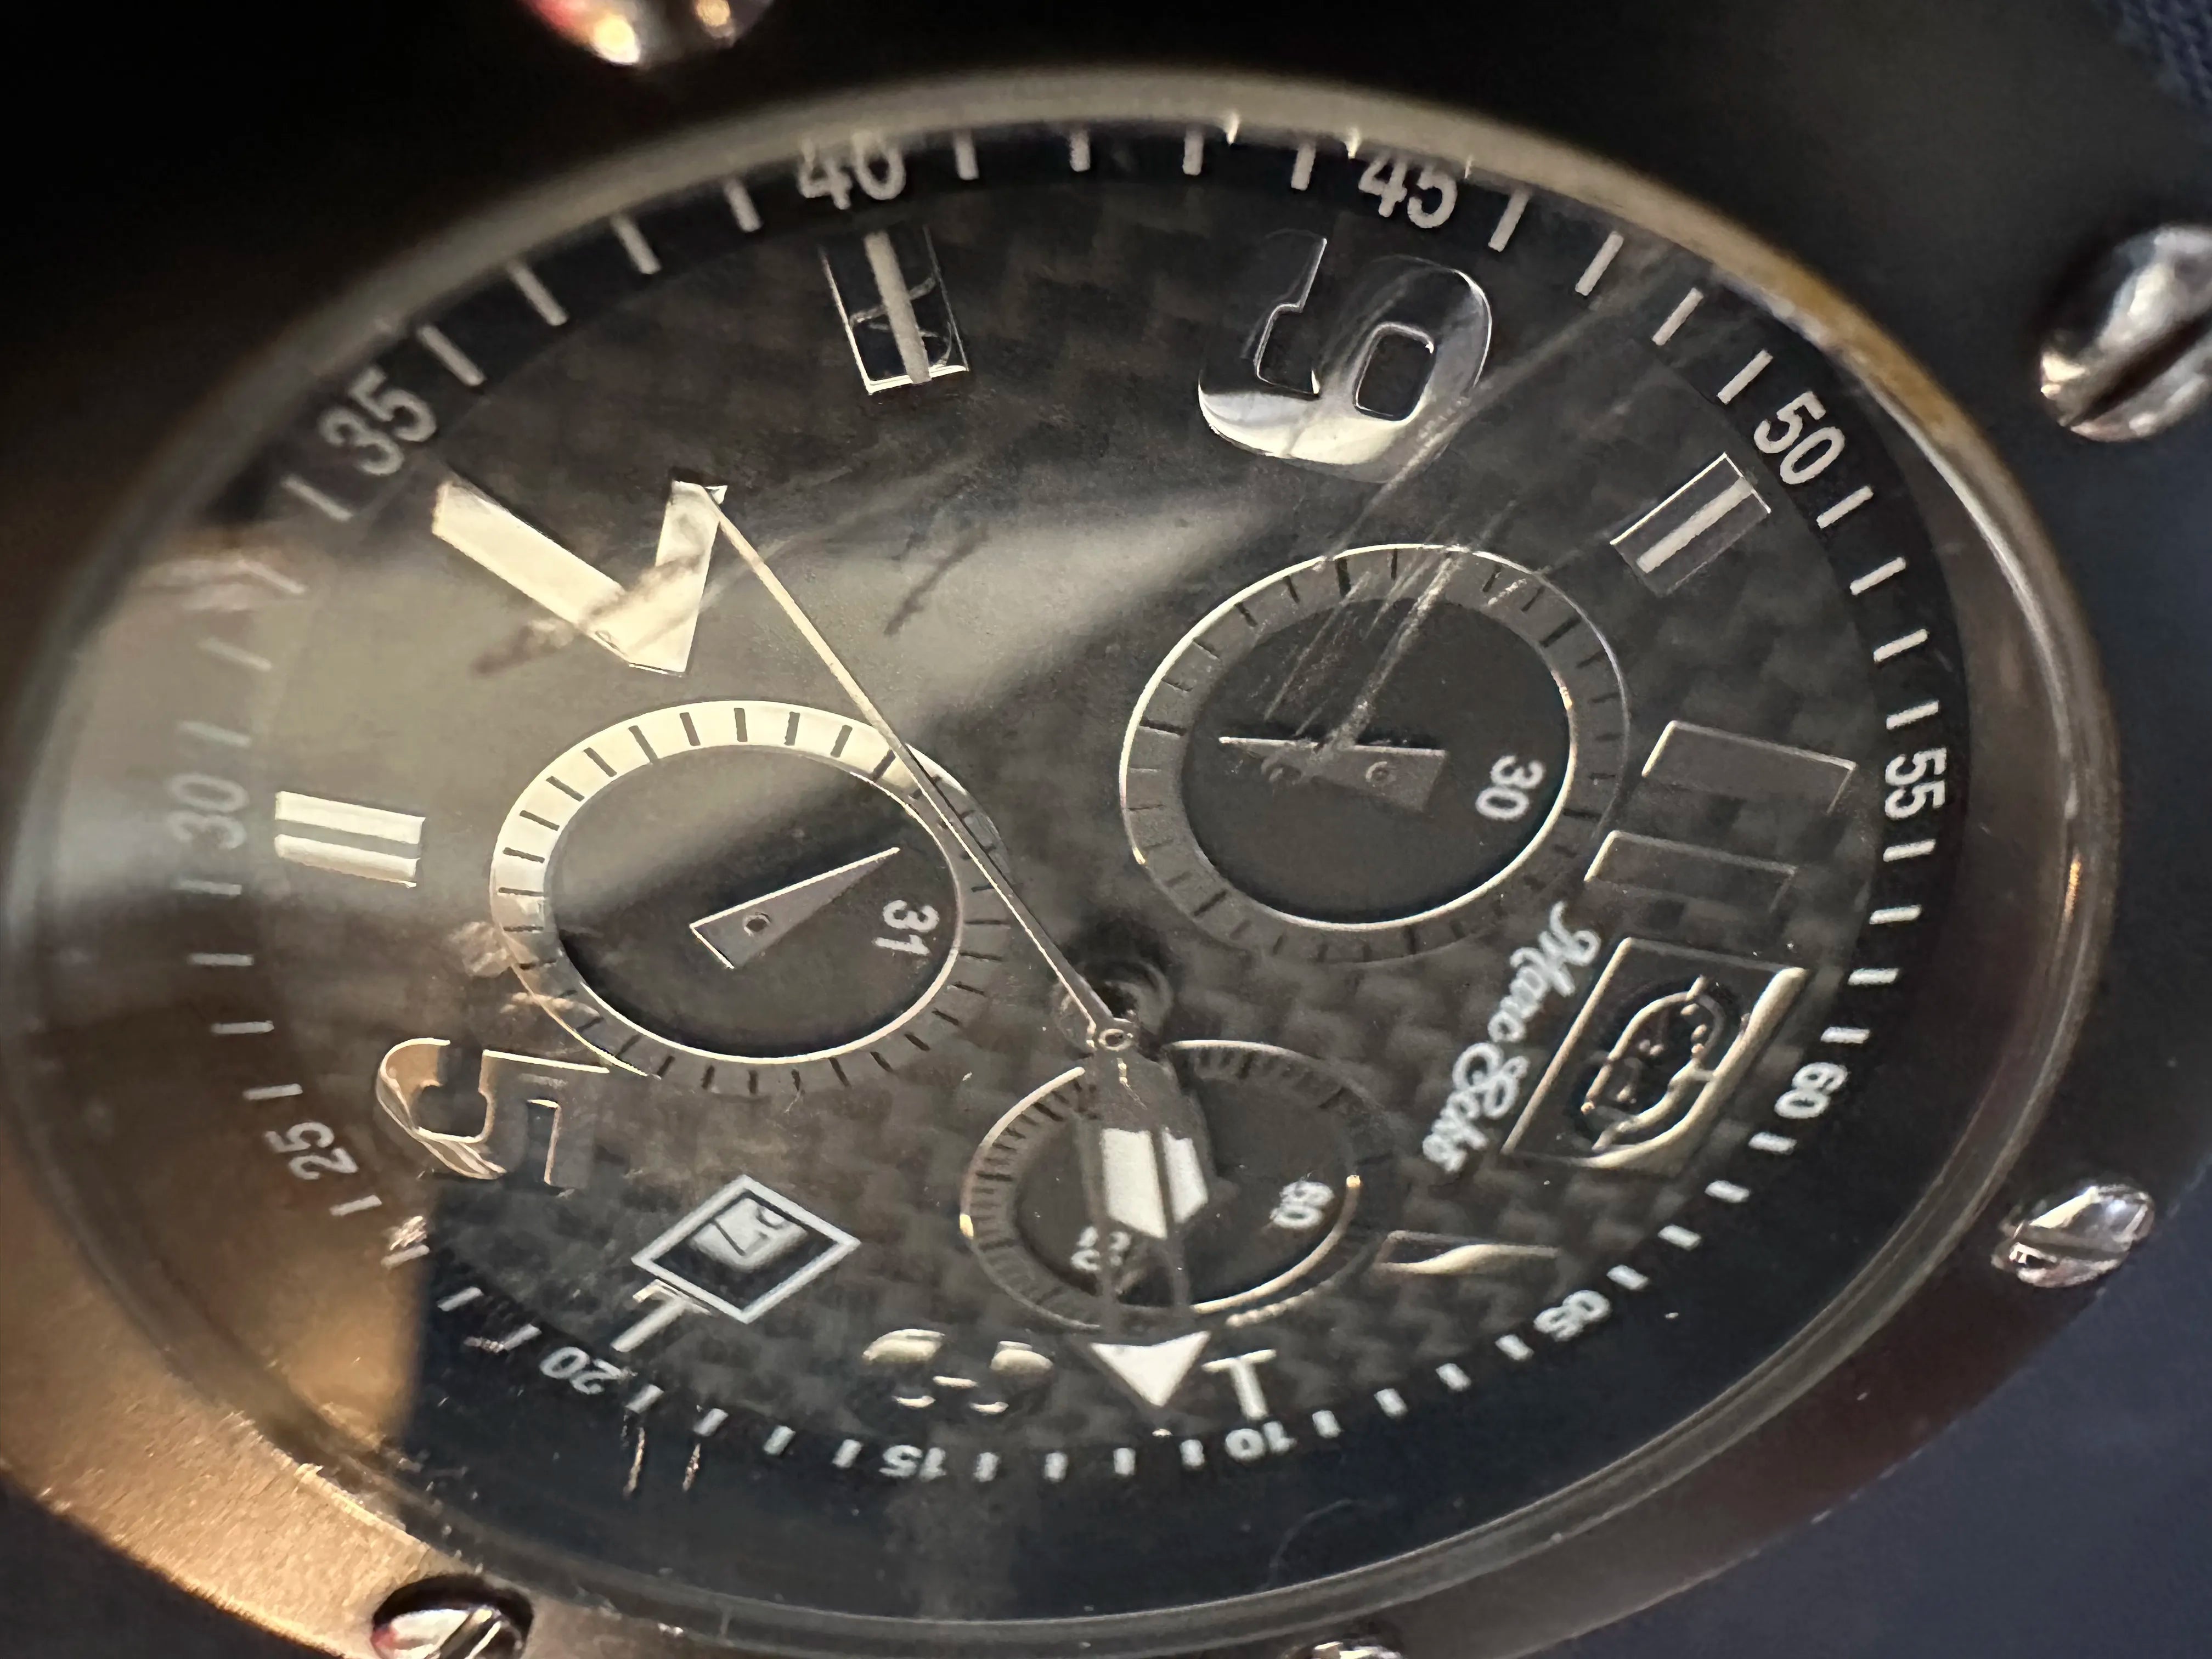 Timepiece MARC ECKO MEN'S BLACK WATCH E22521G2 Swiss Exclusive collection  Rhino | eBay